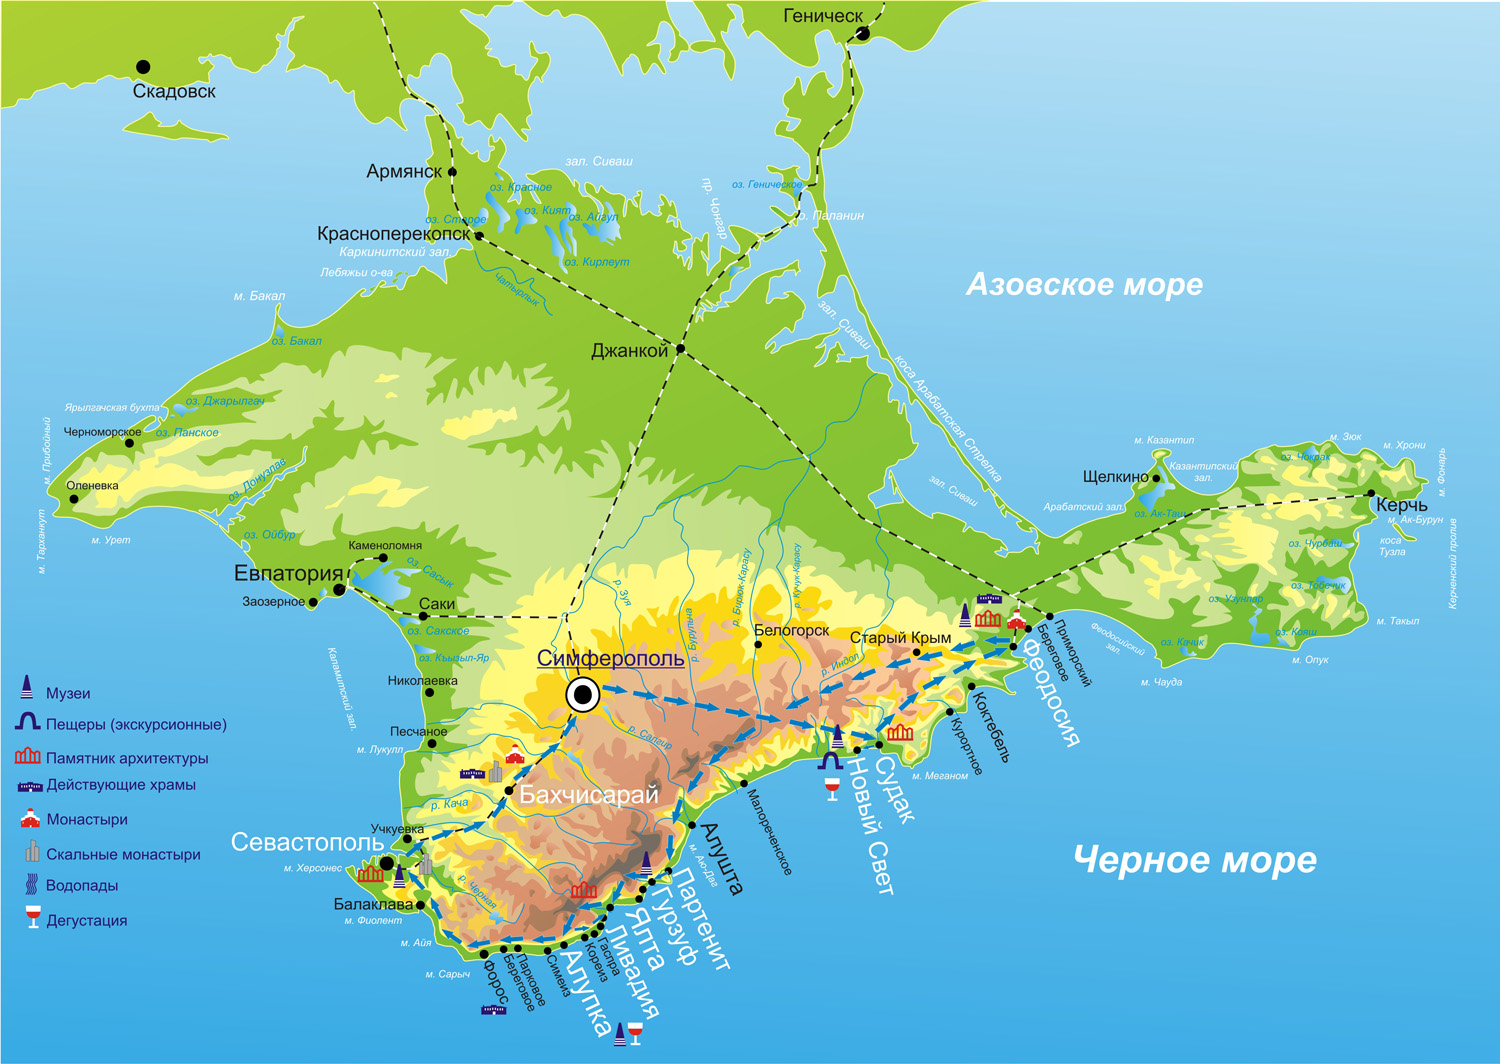 Crimean Circumnavigation